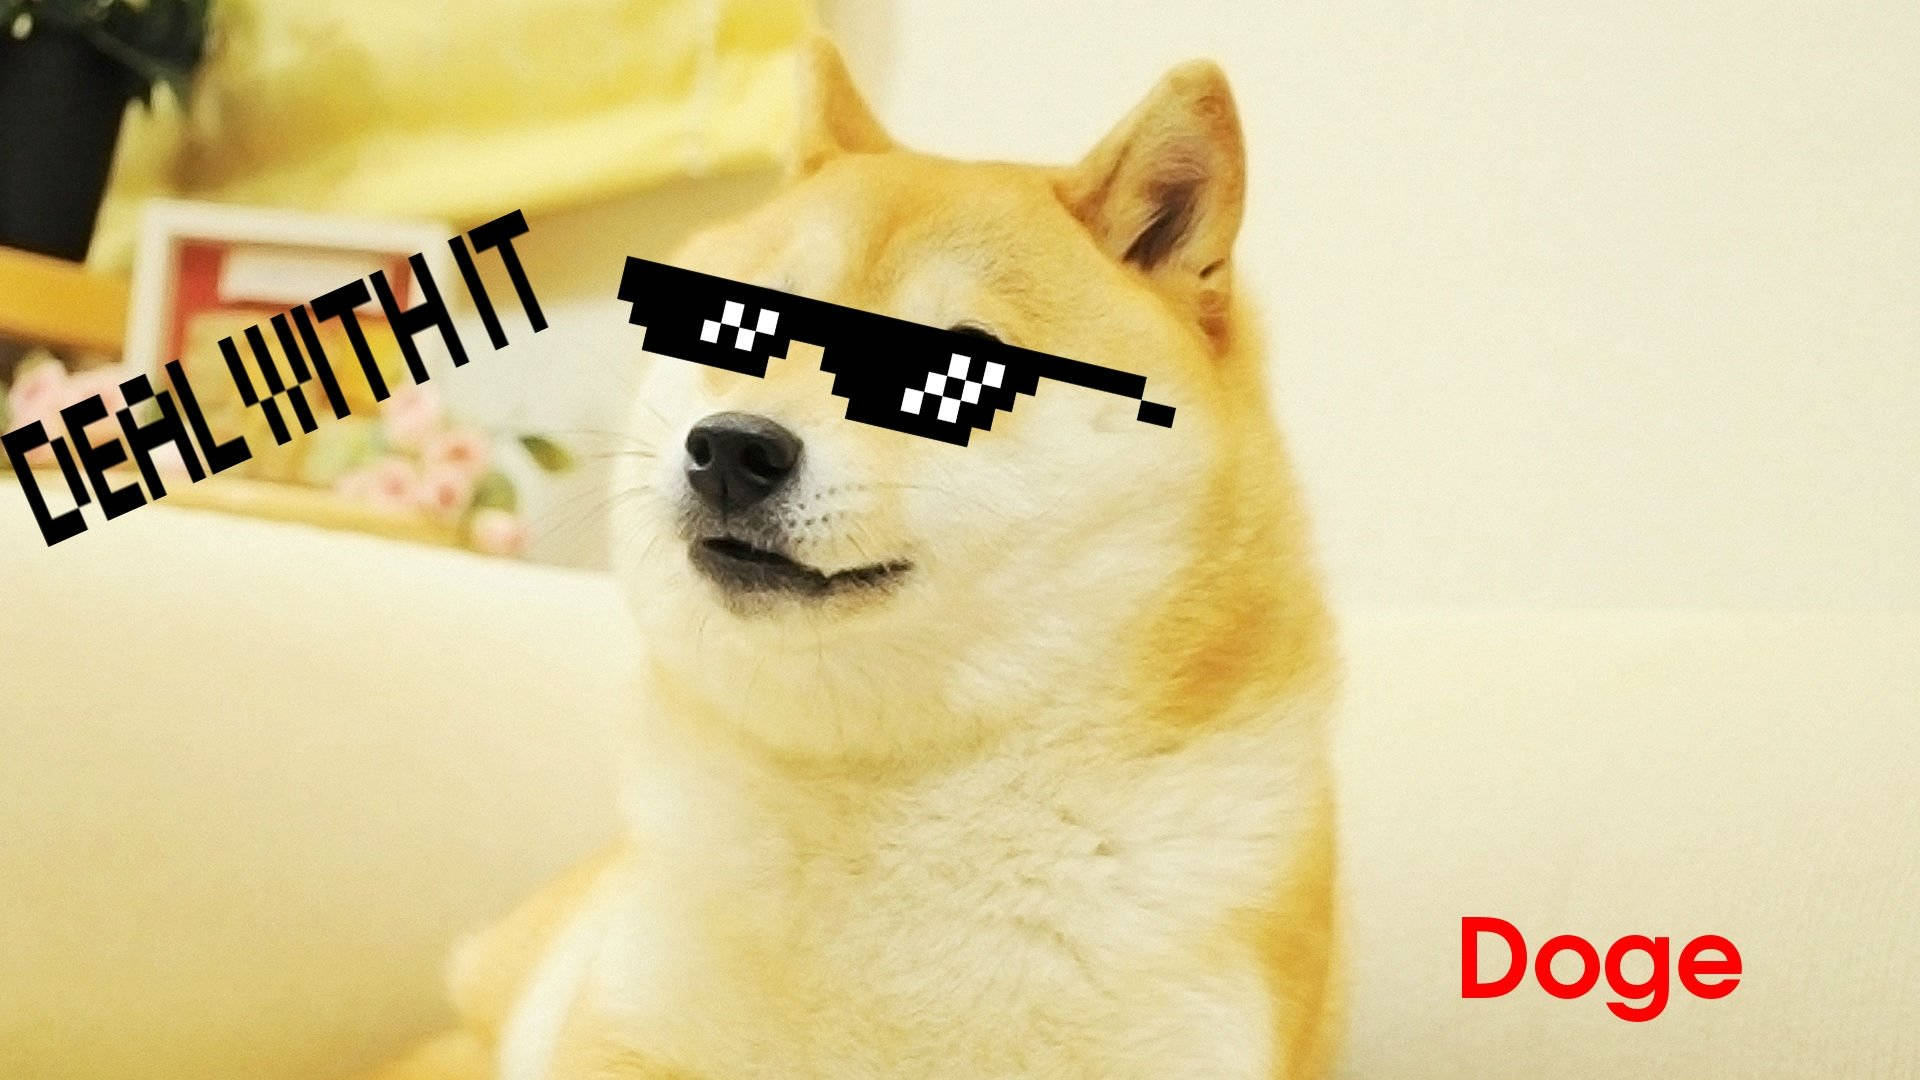 Deal With It Doge Meme Wallpaper